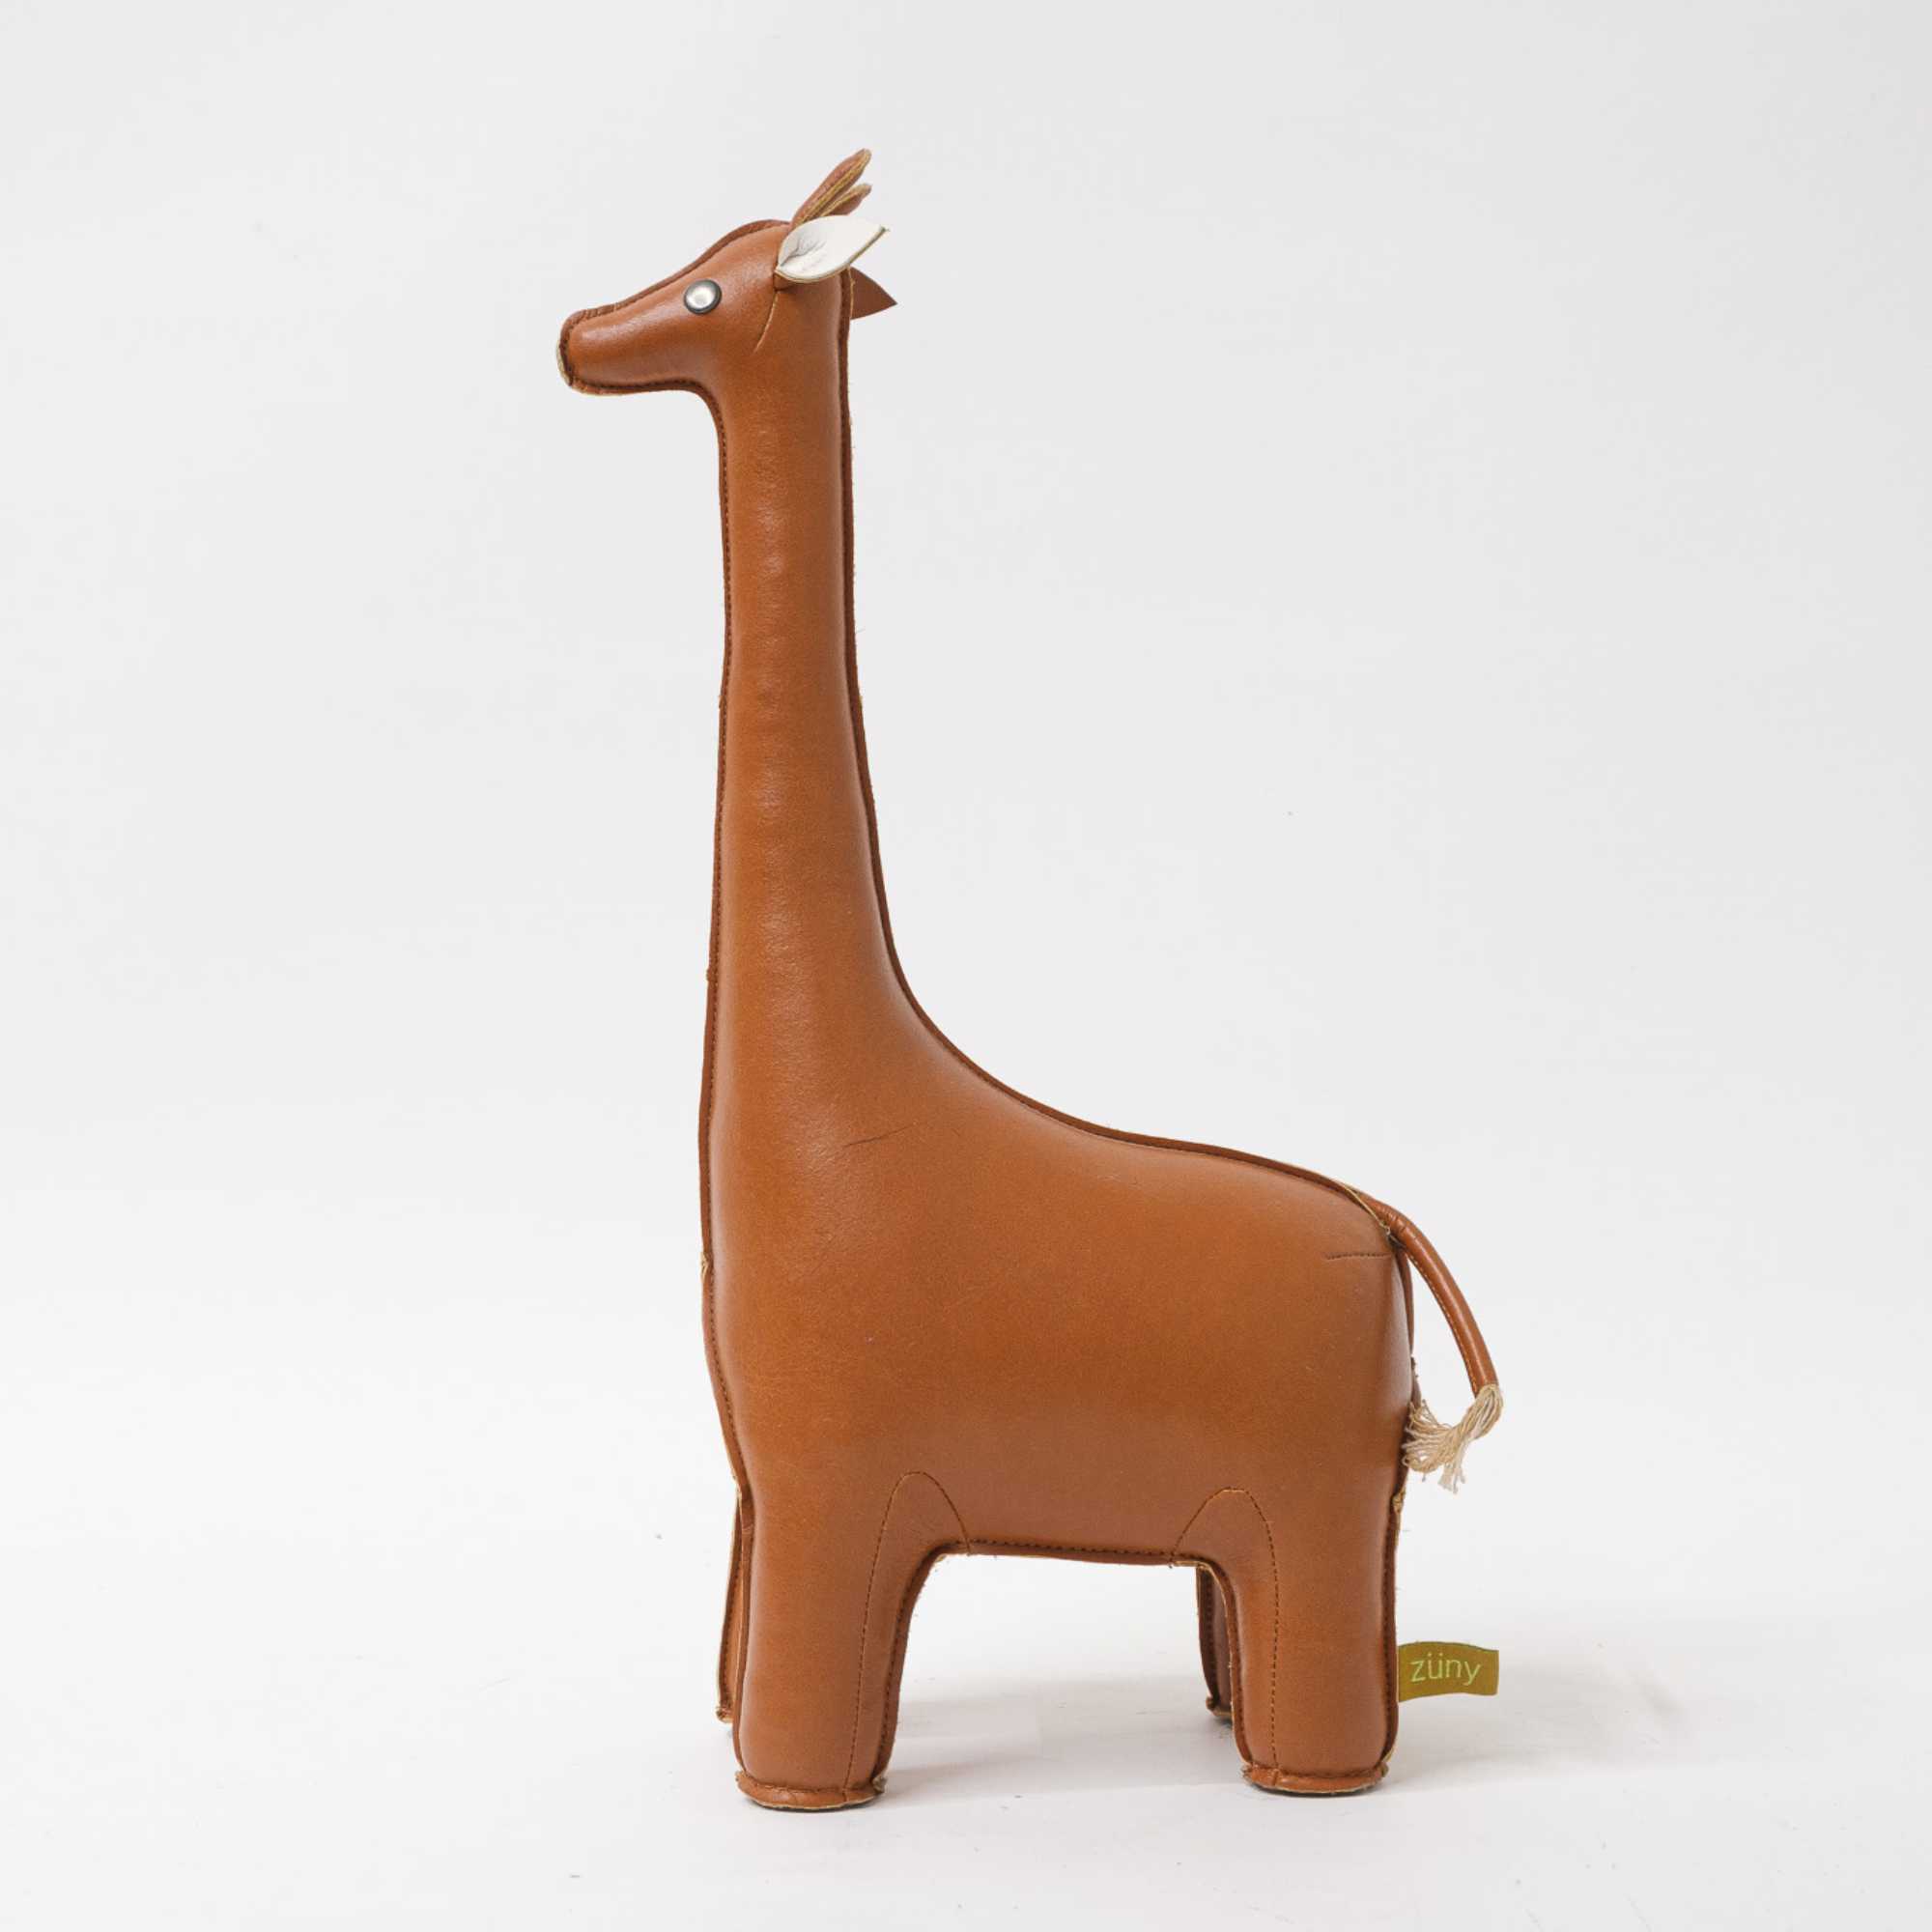 ex-display | Zuny Bookend Classic Giraffe, tan/wheat